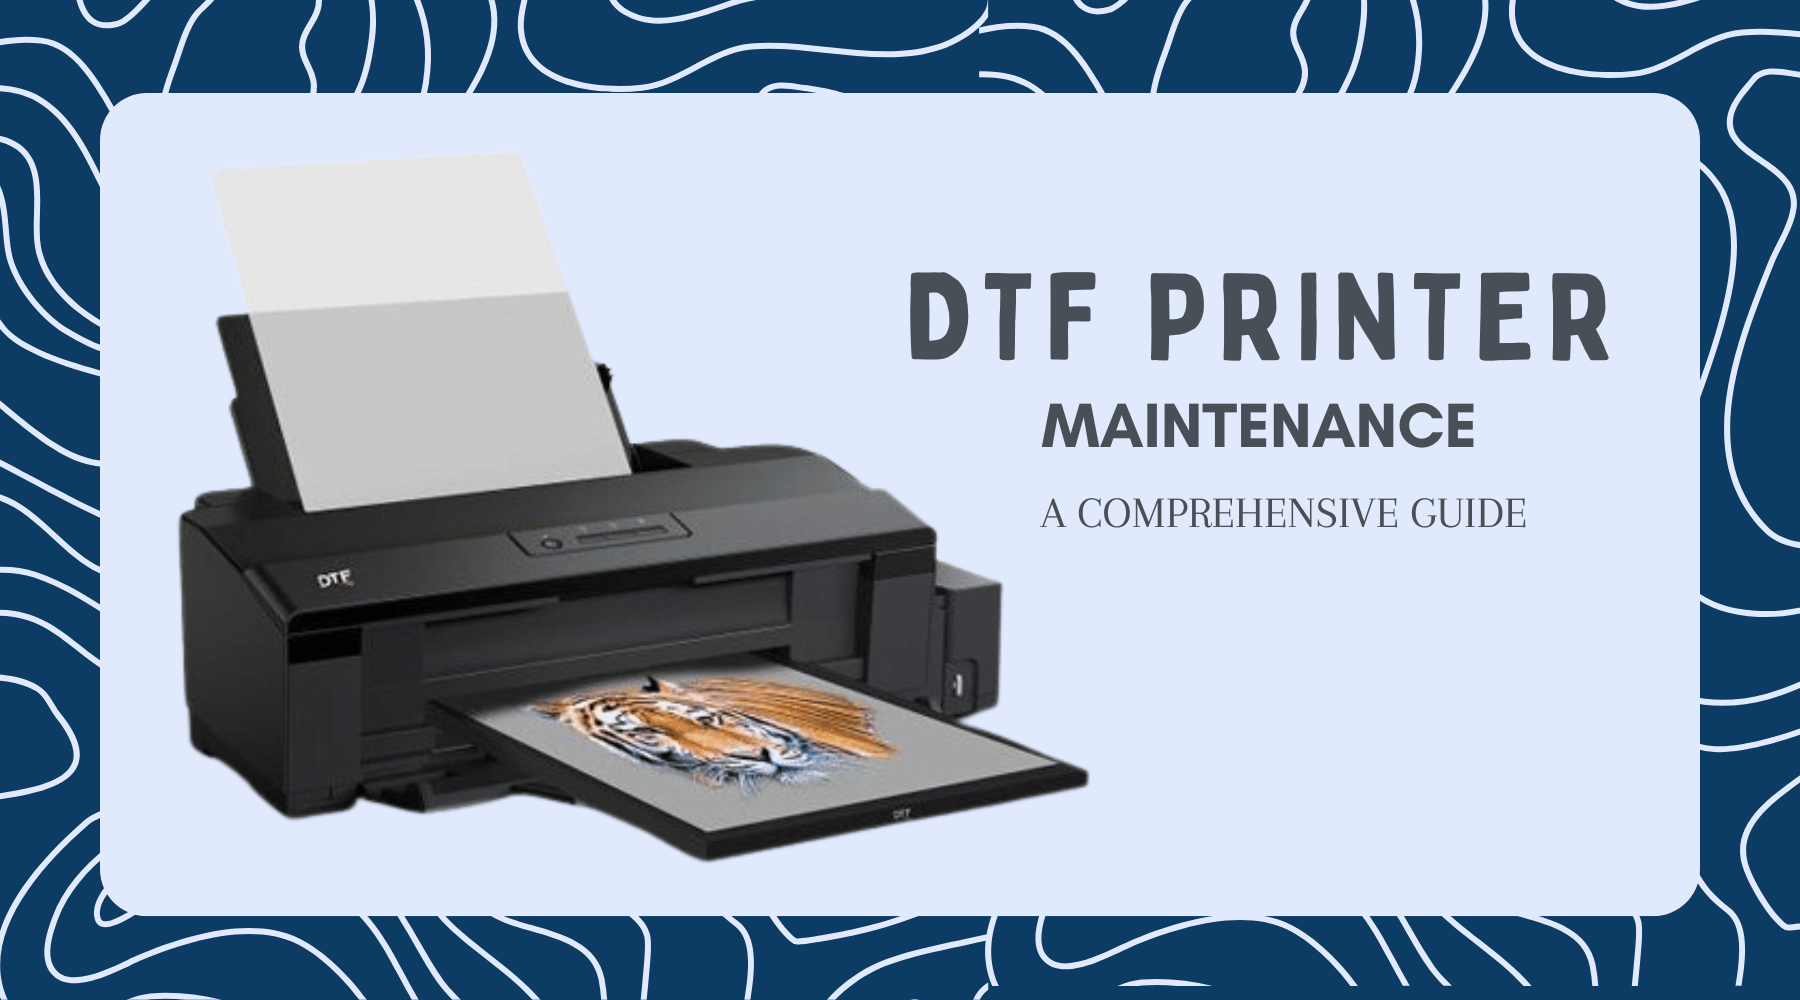 DTF Printer Maintenance